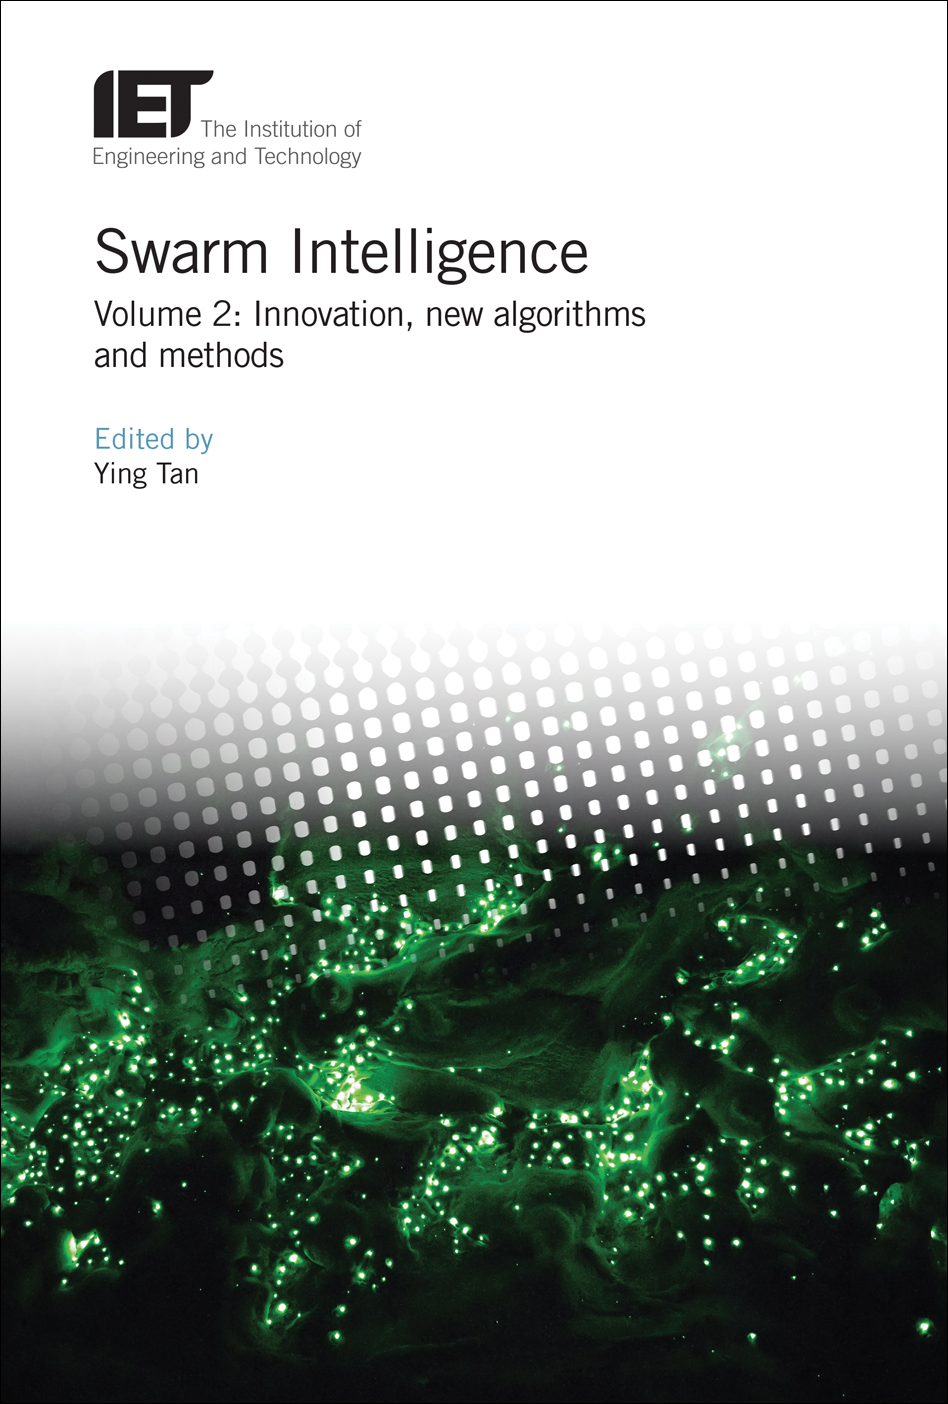 Swarm Intelligence, Volume 2: Innovation, new algorithms and methods